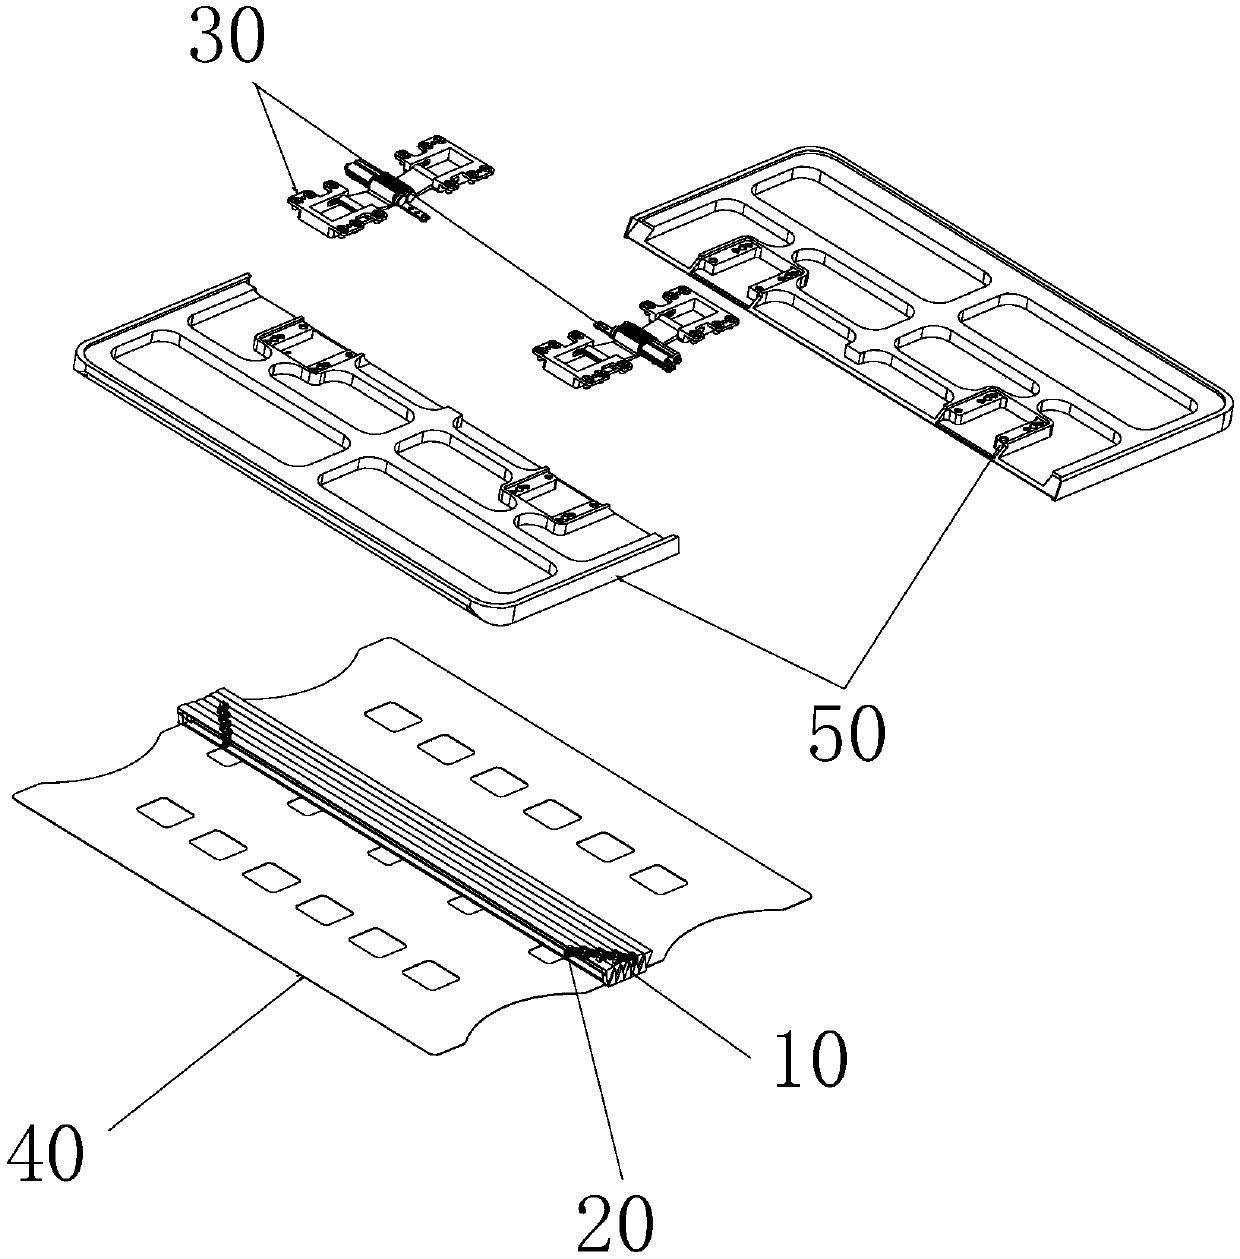 Folding mechanism for flexible screen